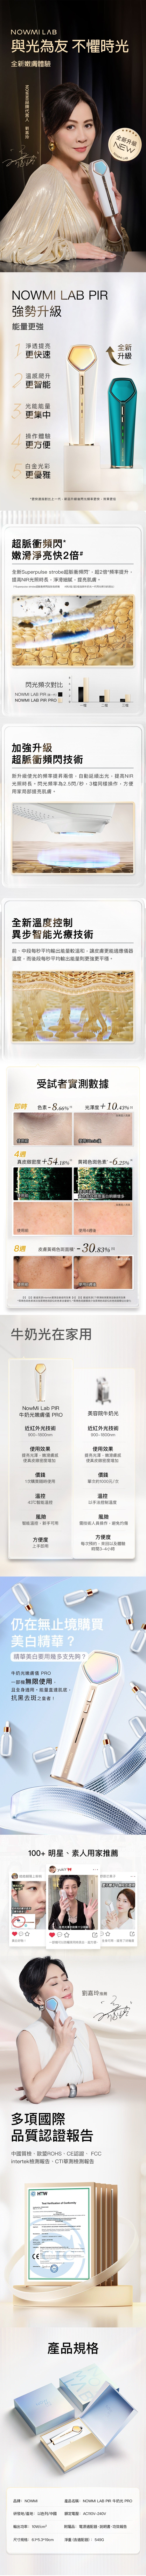 NowMi Lab PIR-PRO  Skin Whitening & Rejuvenation Device | NowMi Lab PIR-PRO - Best At Home Device For long-lasting facial rejuvenation and whitening | BeautyFoo Mall Malaysia